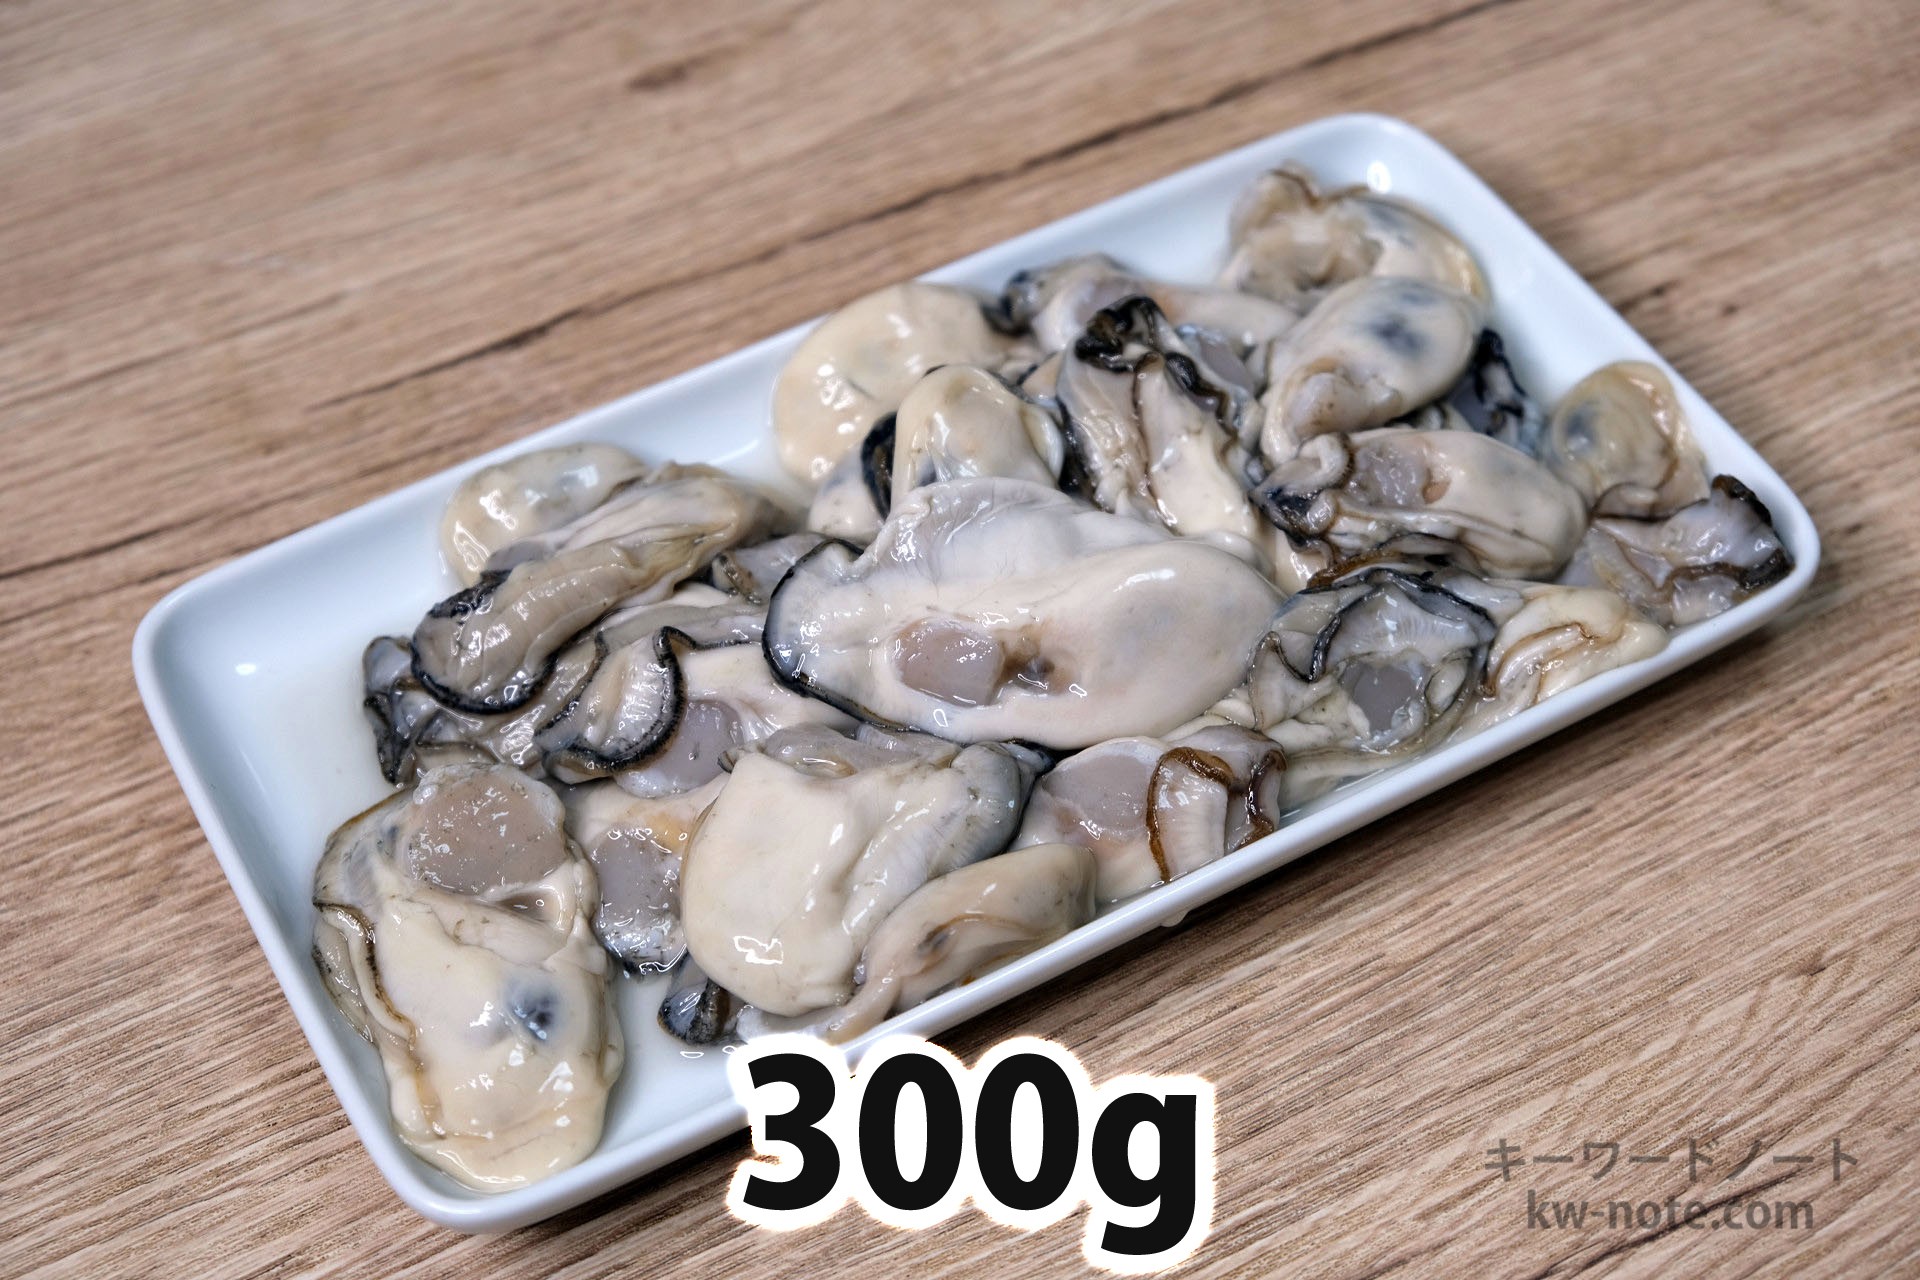 300gの牡蠣